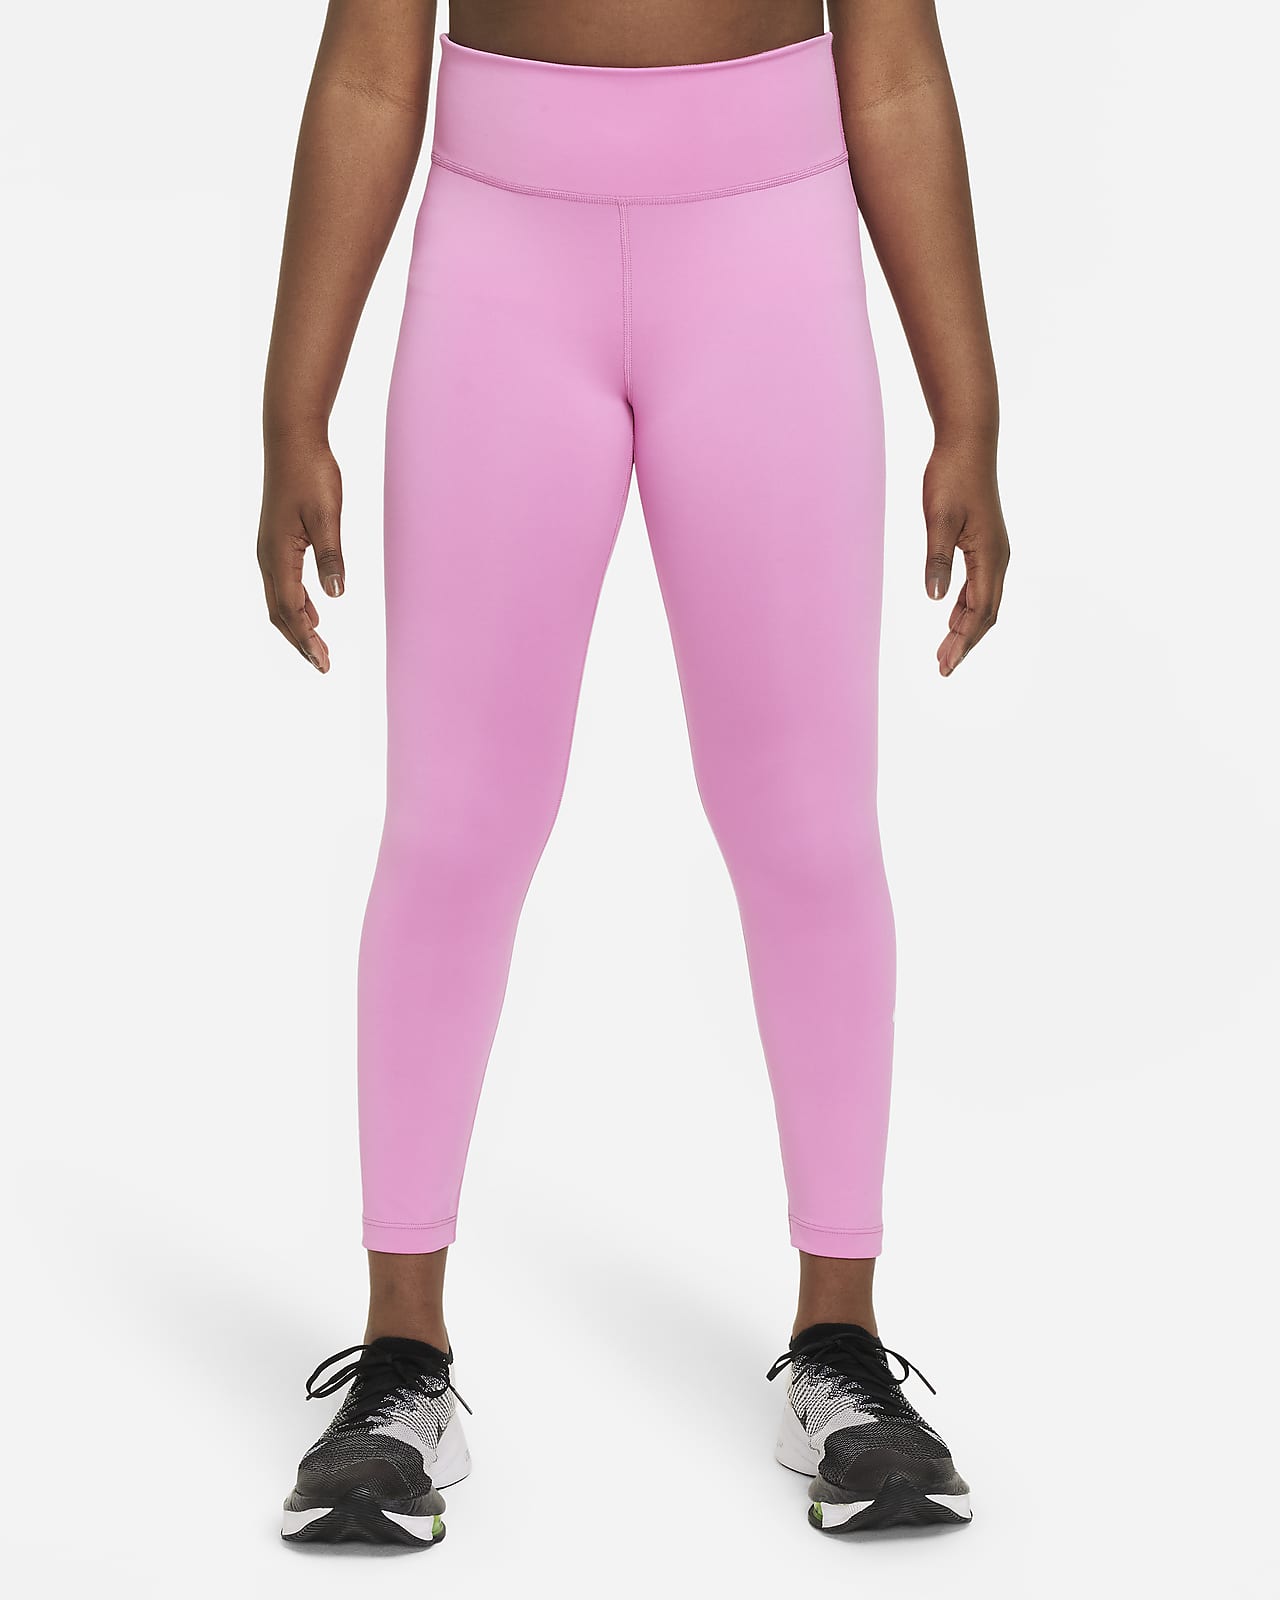 Nike Training One Dri-FIT leggings in hot pink